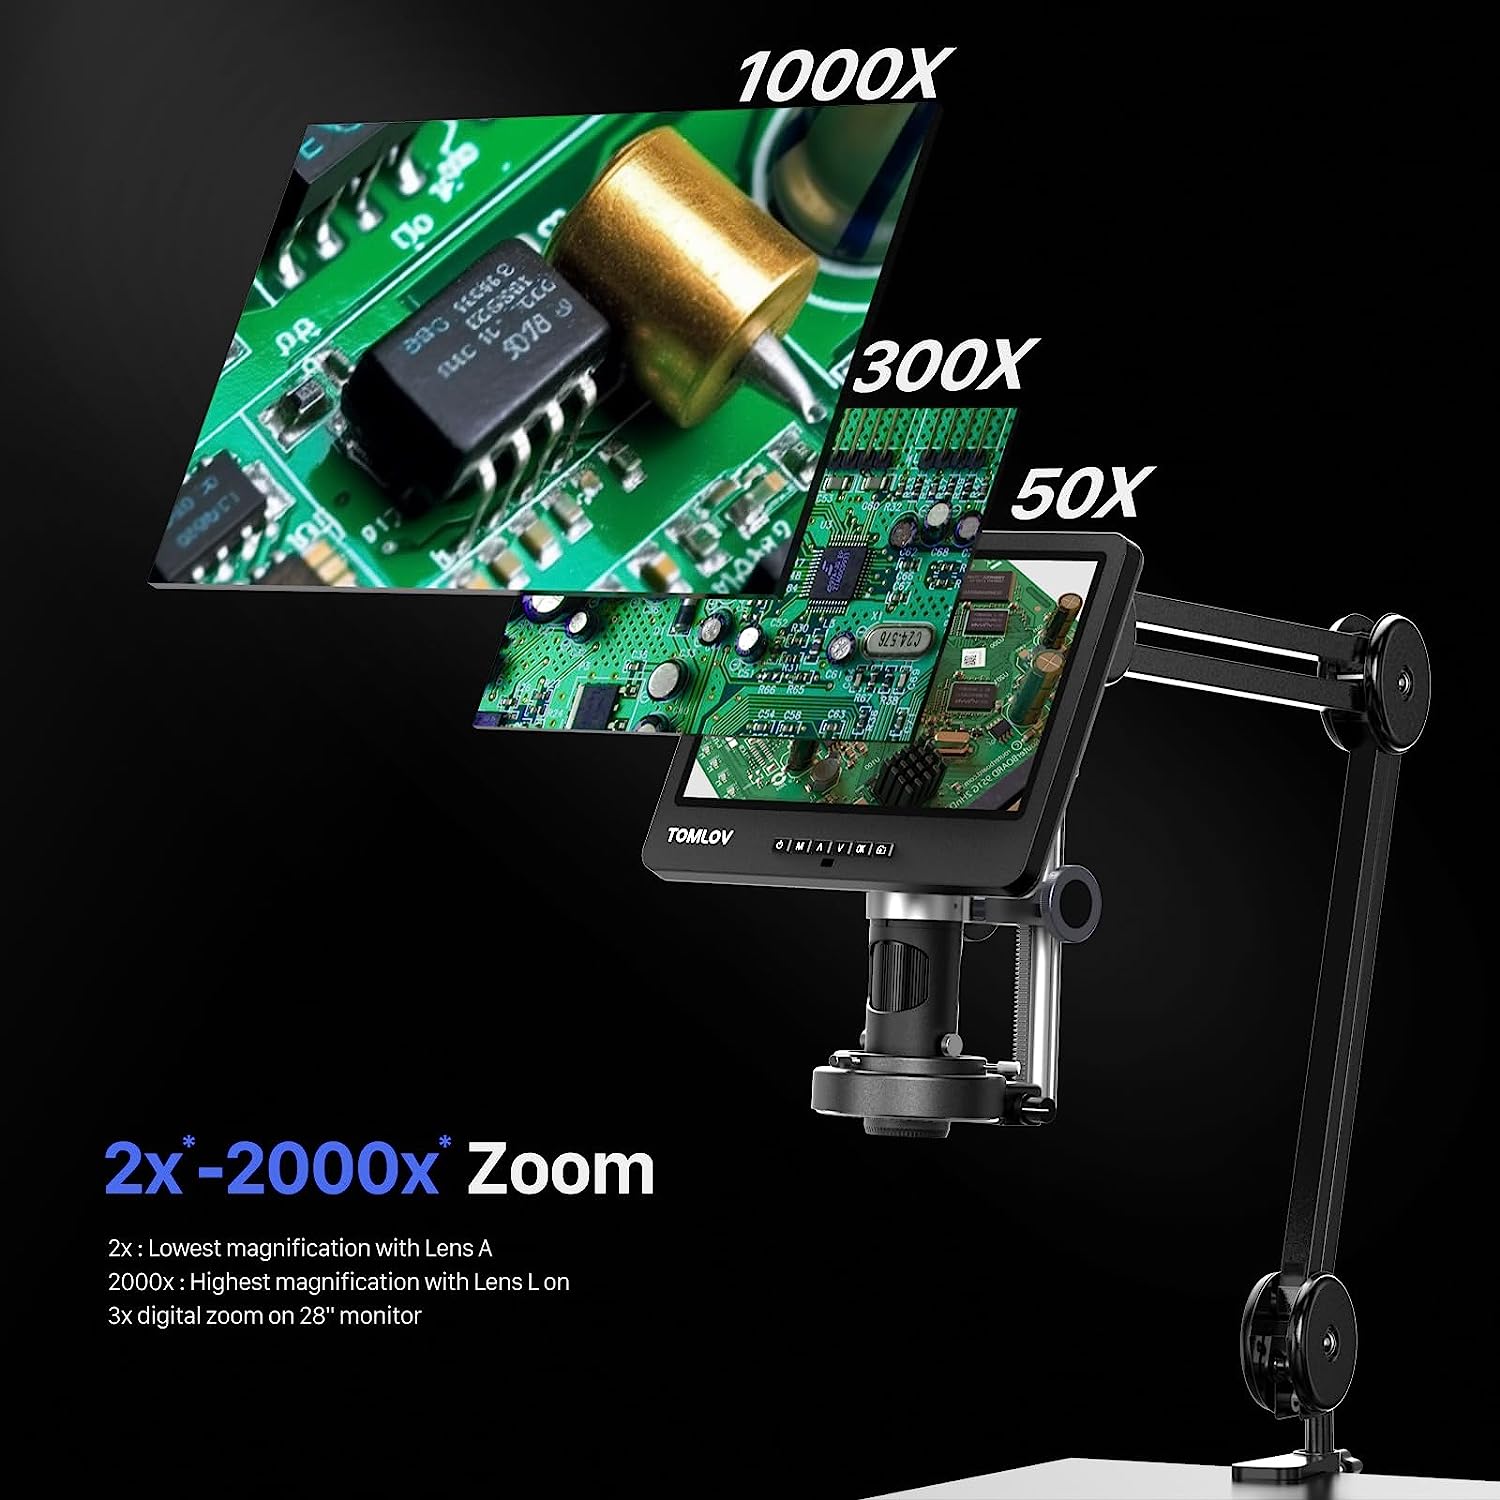 TOMLOV DM602 Flex 10.1" HDMI Digital Soldering Microscope